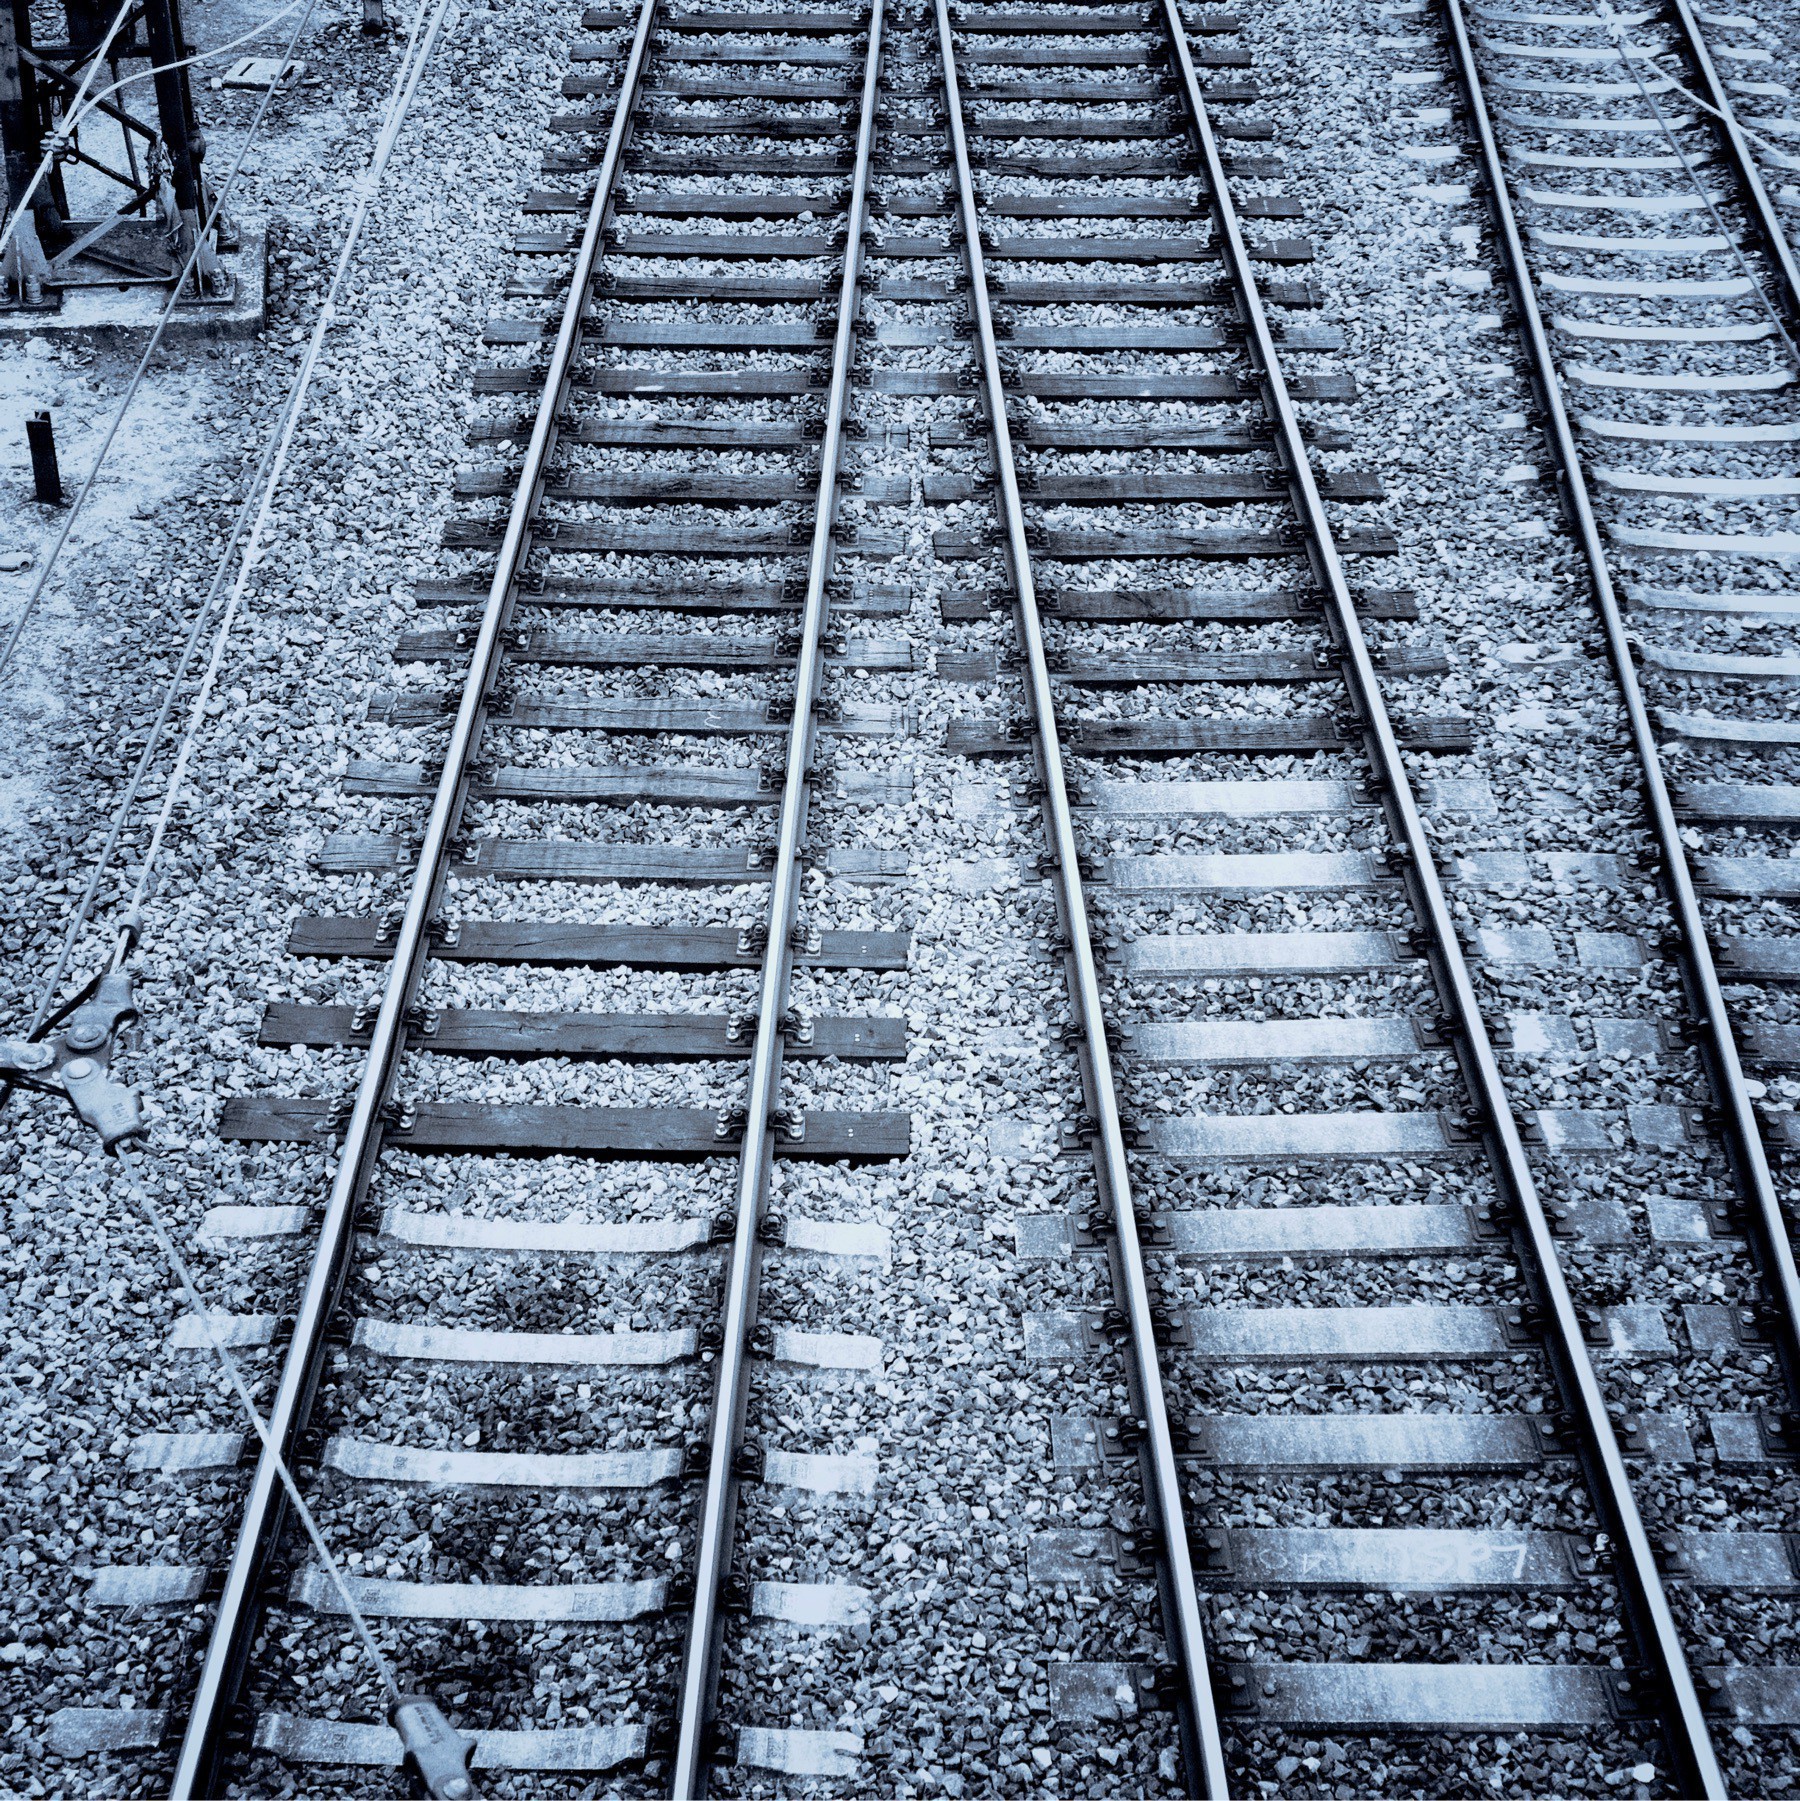 Black and White photo of train tracks.